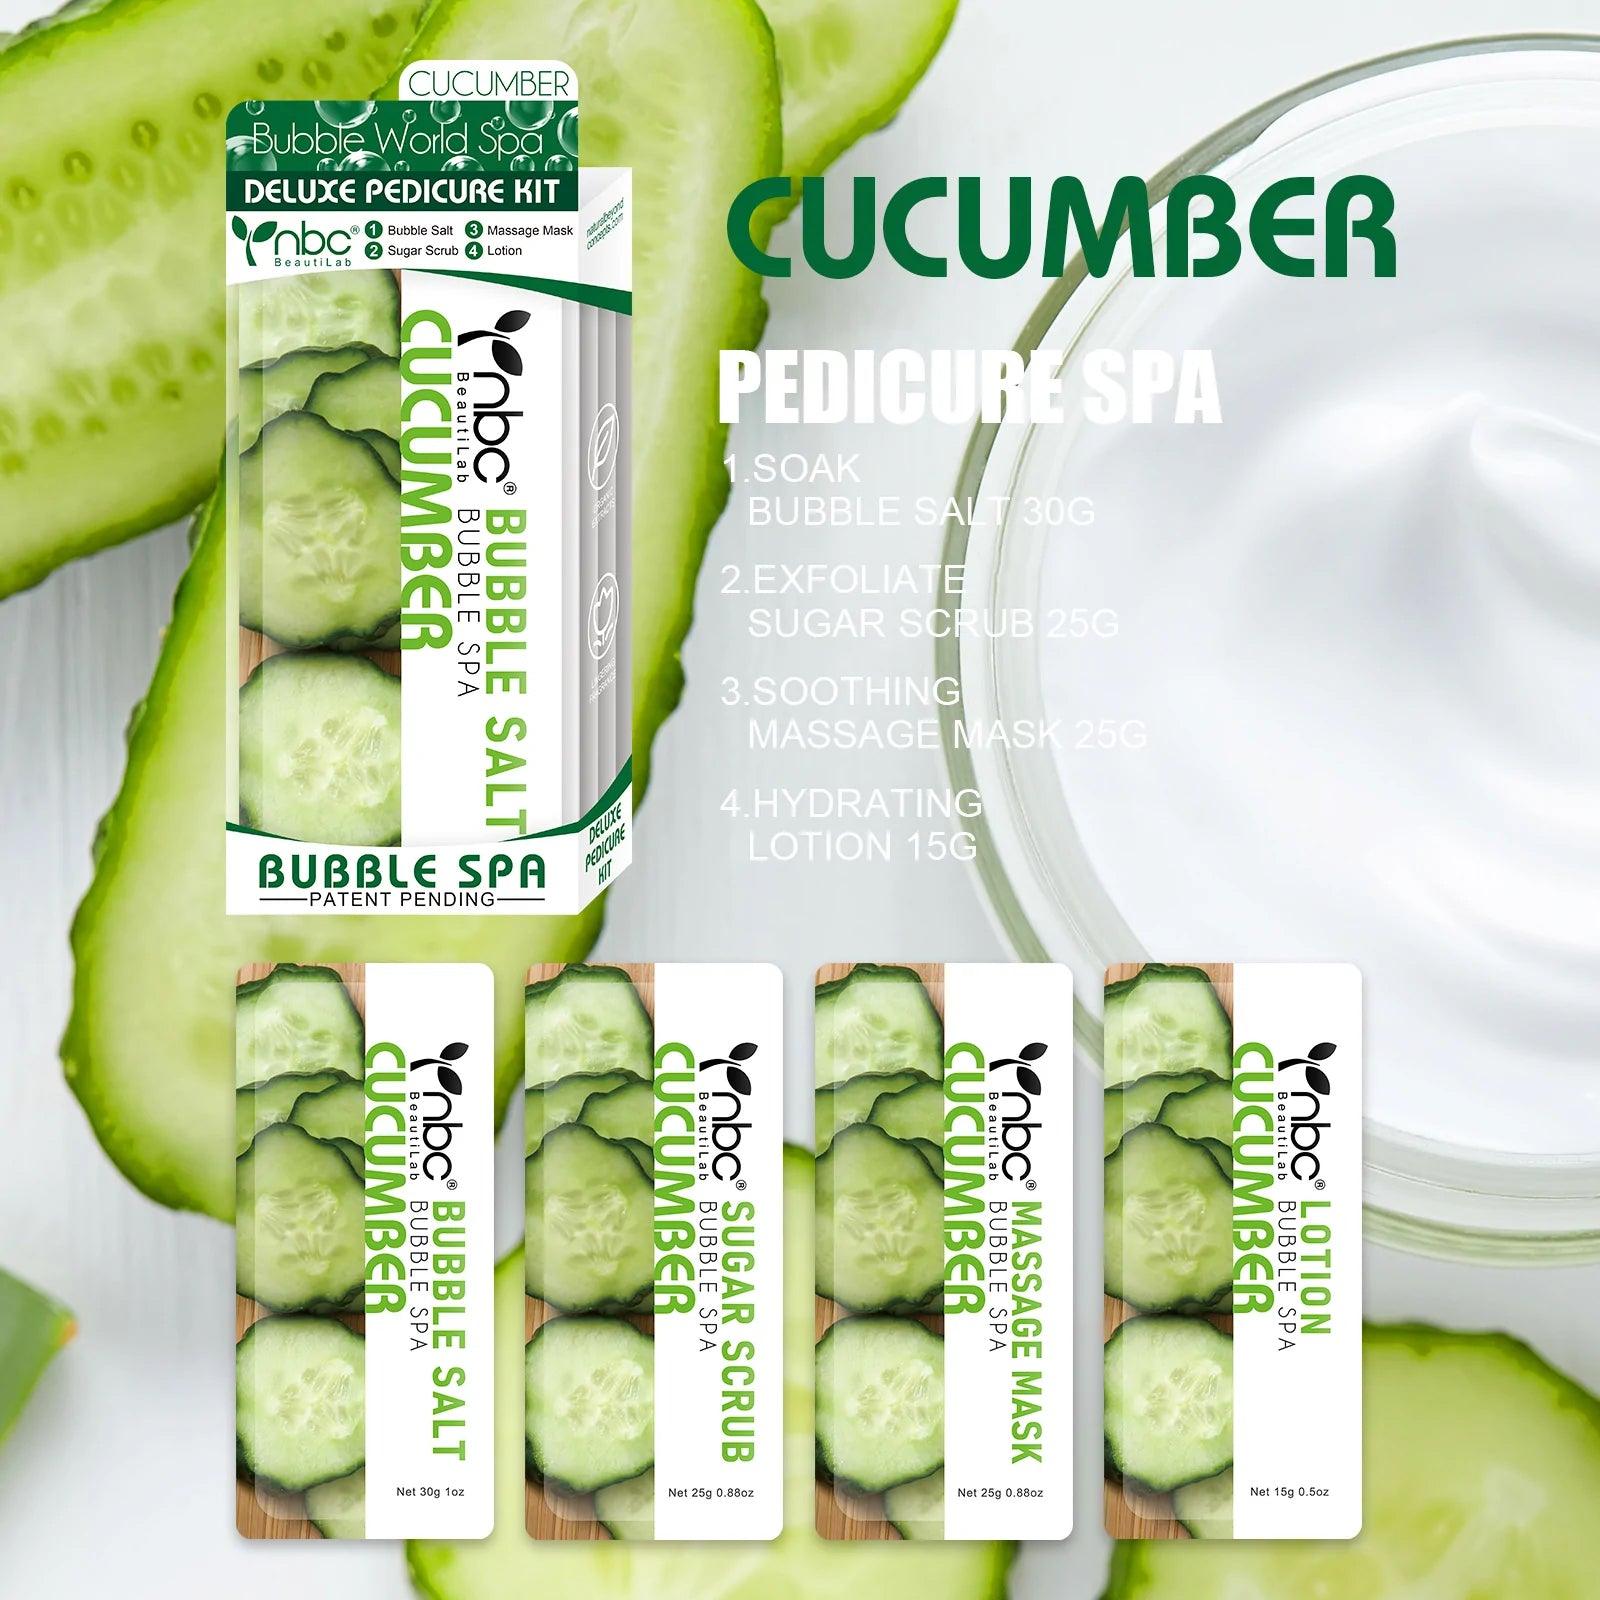 nbc Bubble Spa Pedicure 4 Step Kit - Cucumber